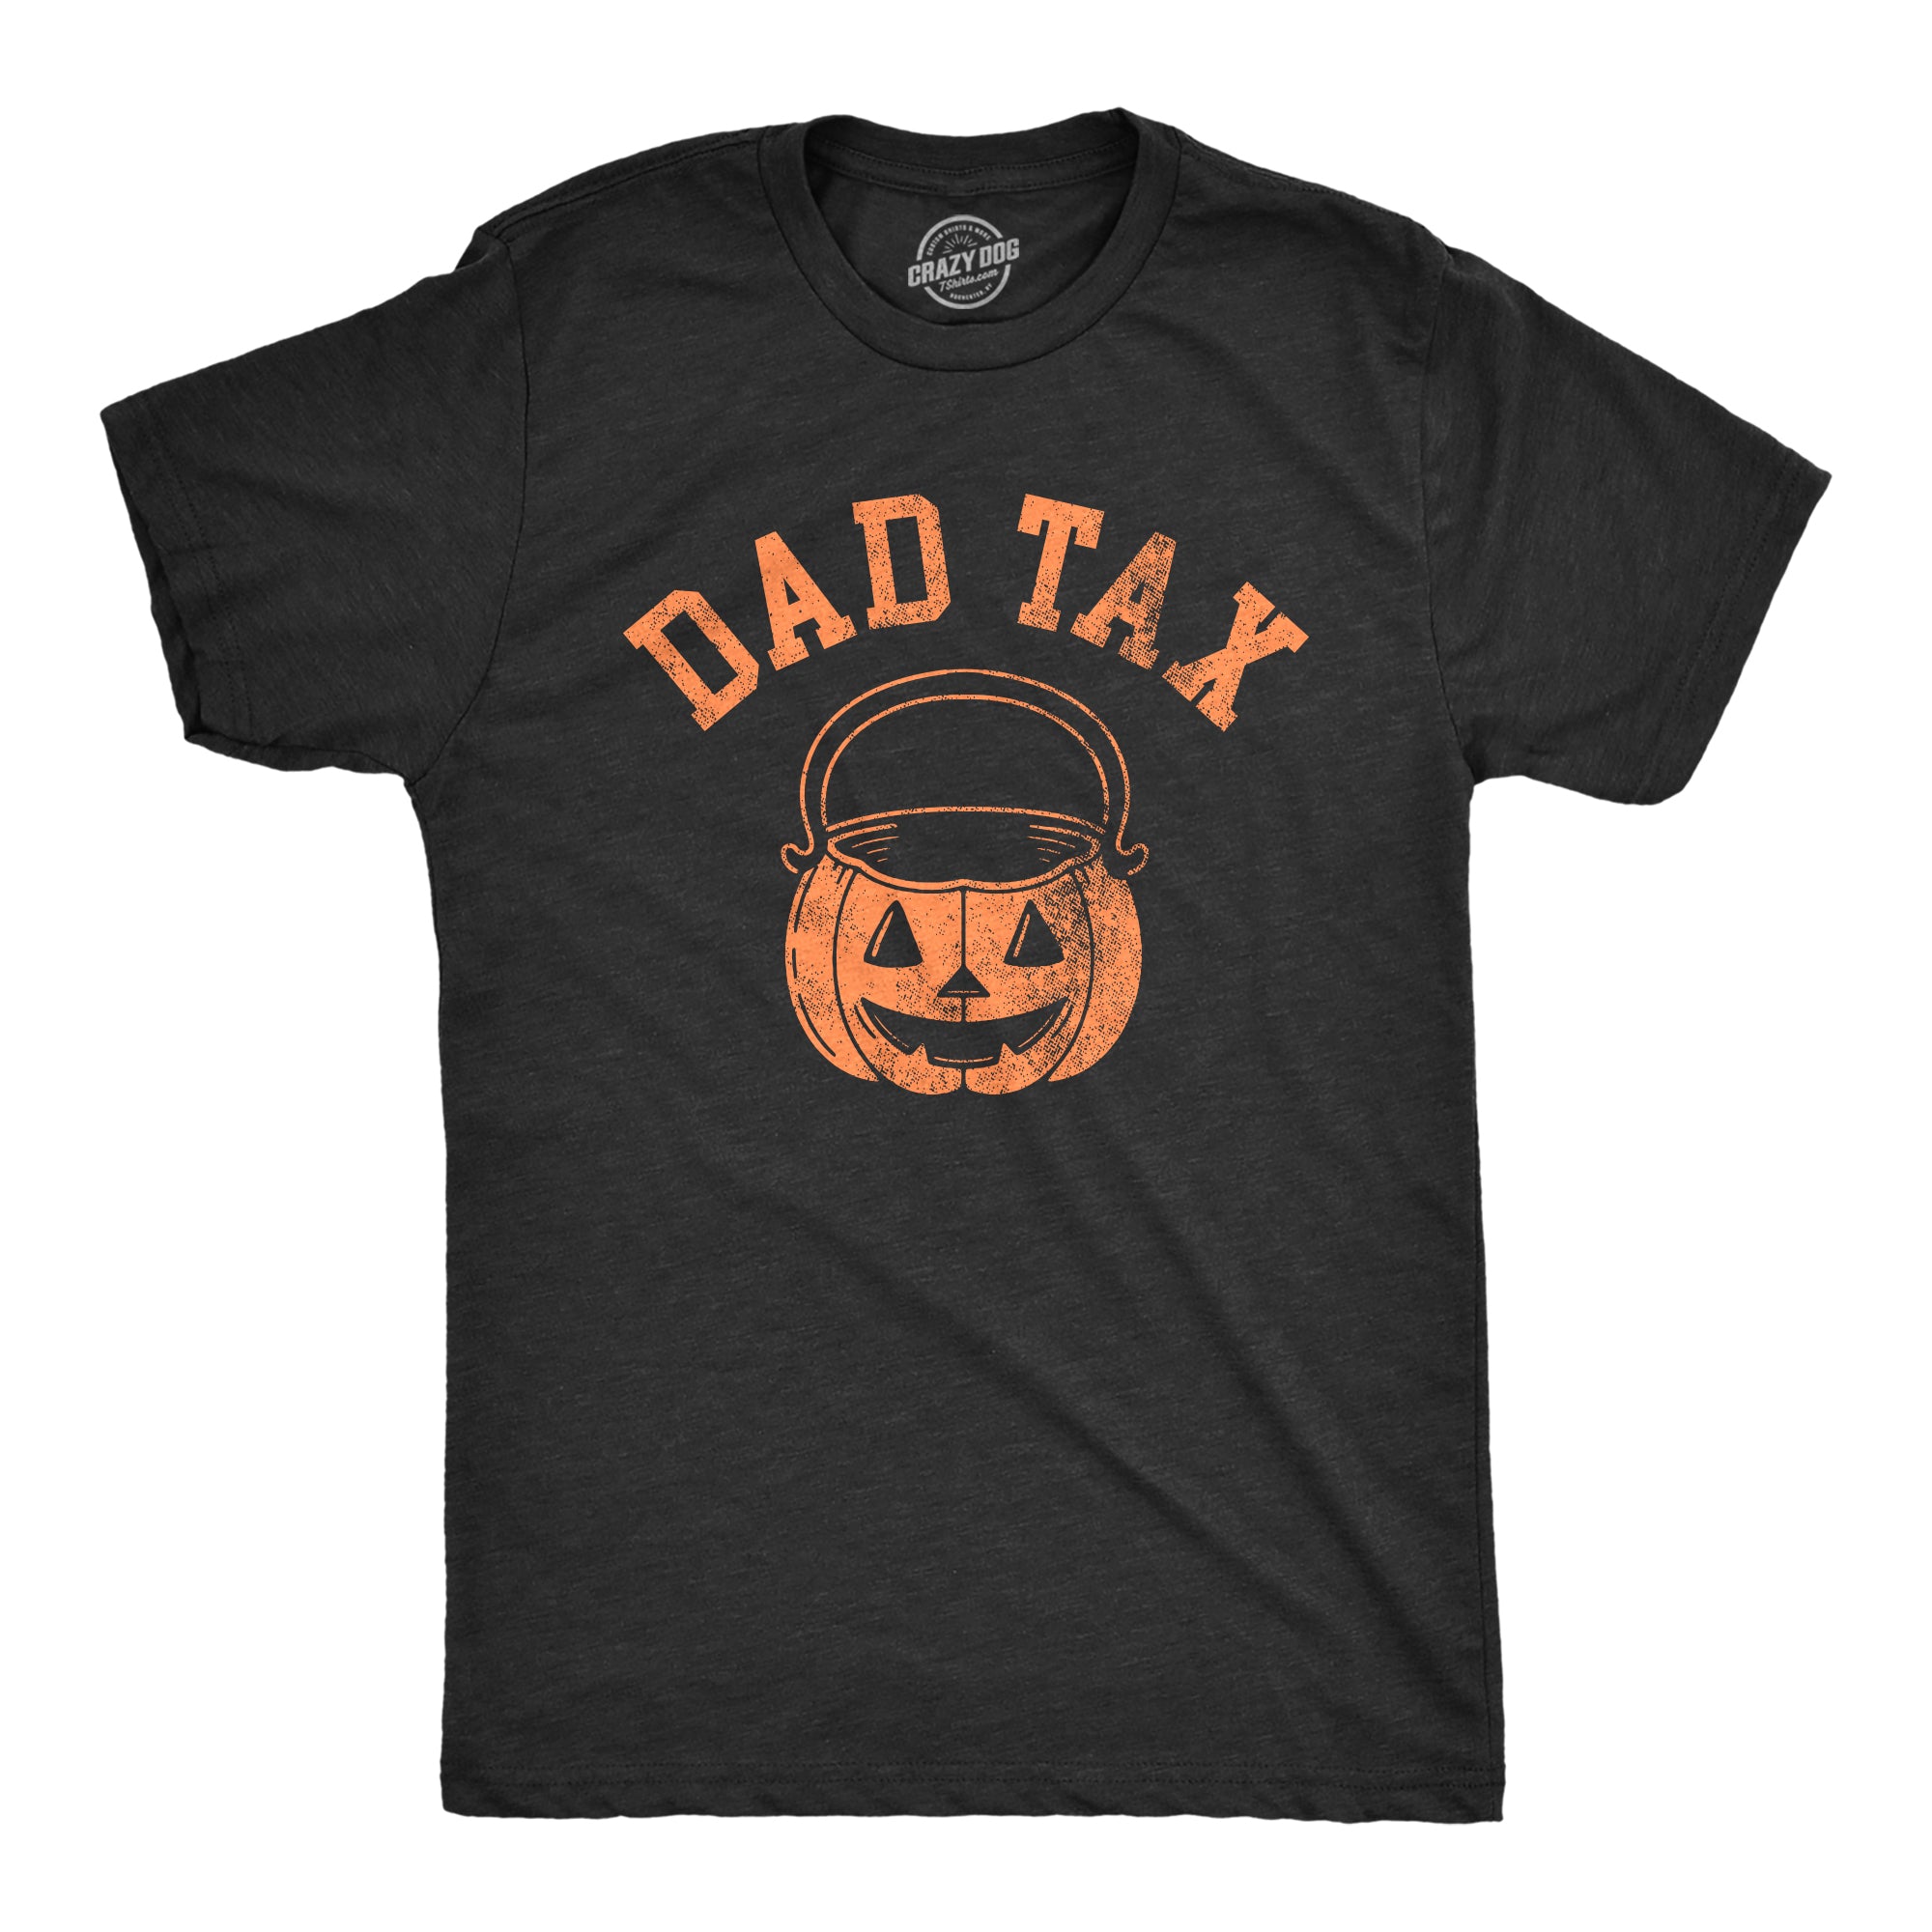 Funny Heather Black - DADTAX Dad Tax Mens T Shirt Nerdy halloween Sarcastic Tee